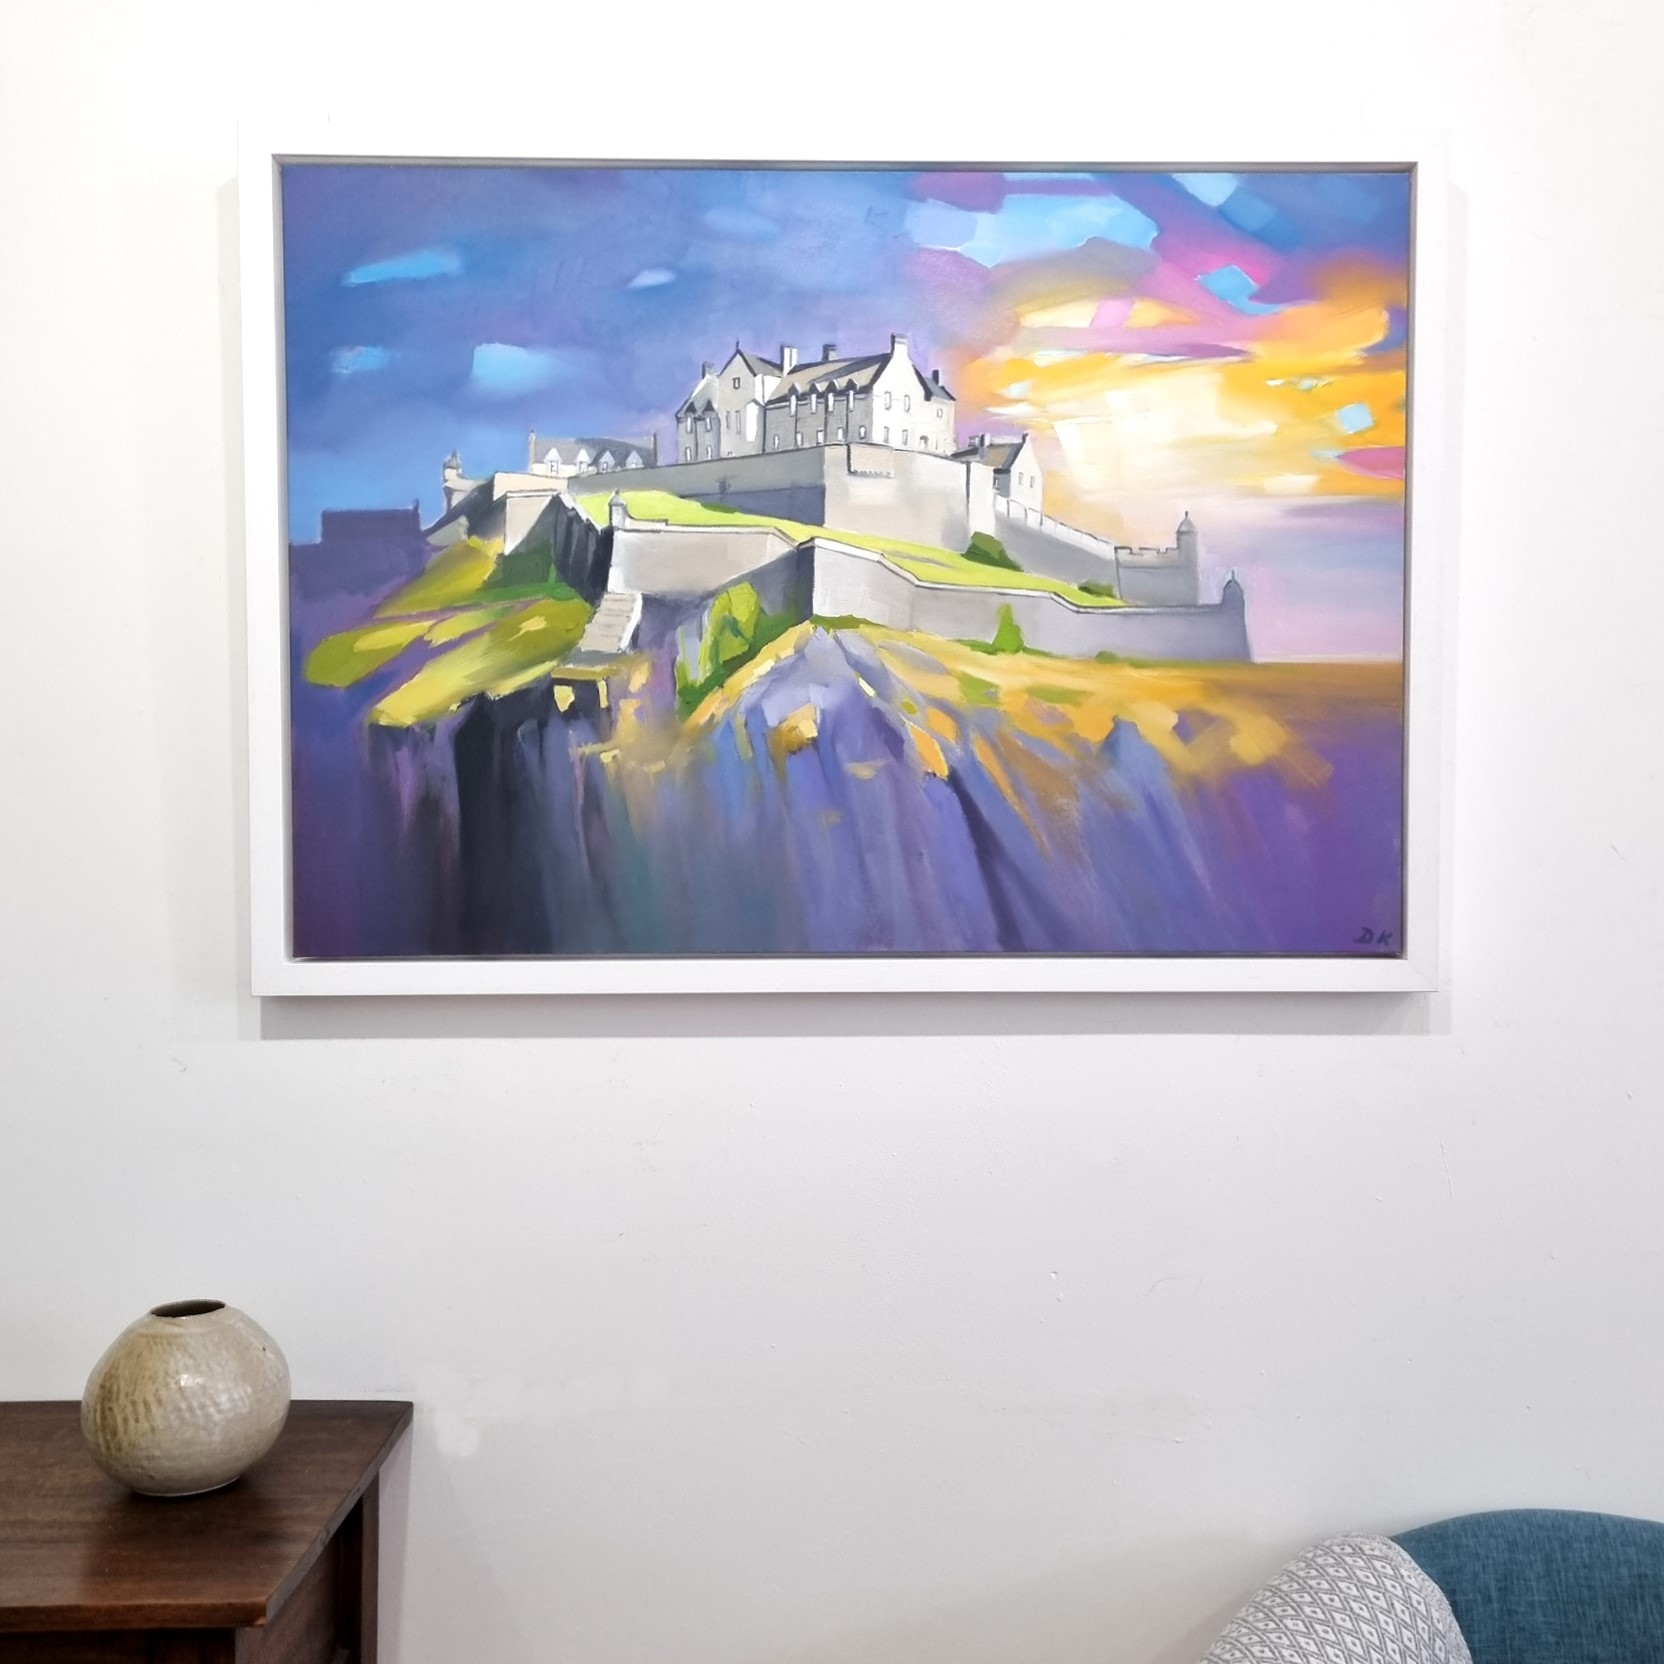 'Edinburgh Castle' by artist DK  MacLeod